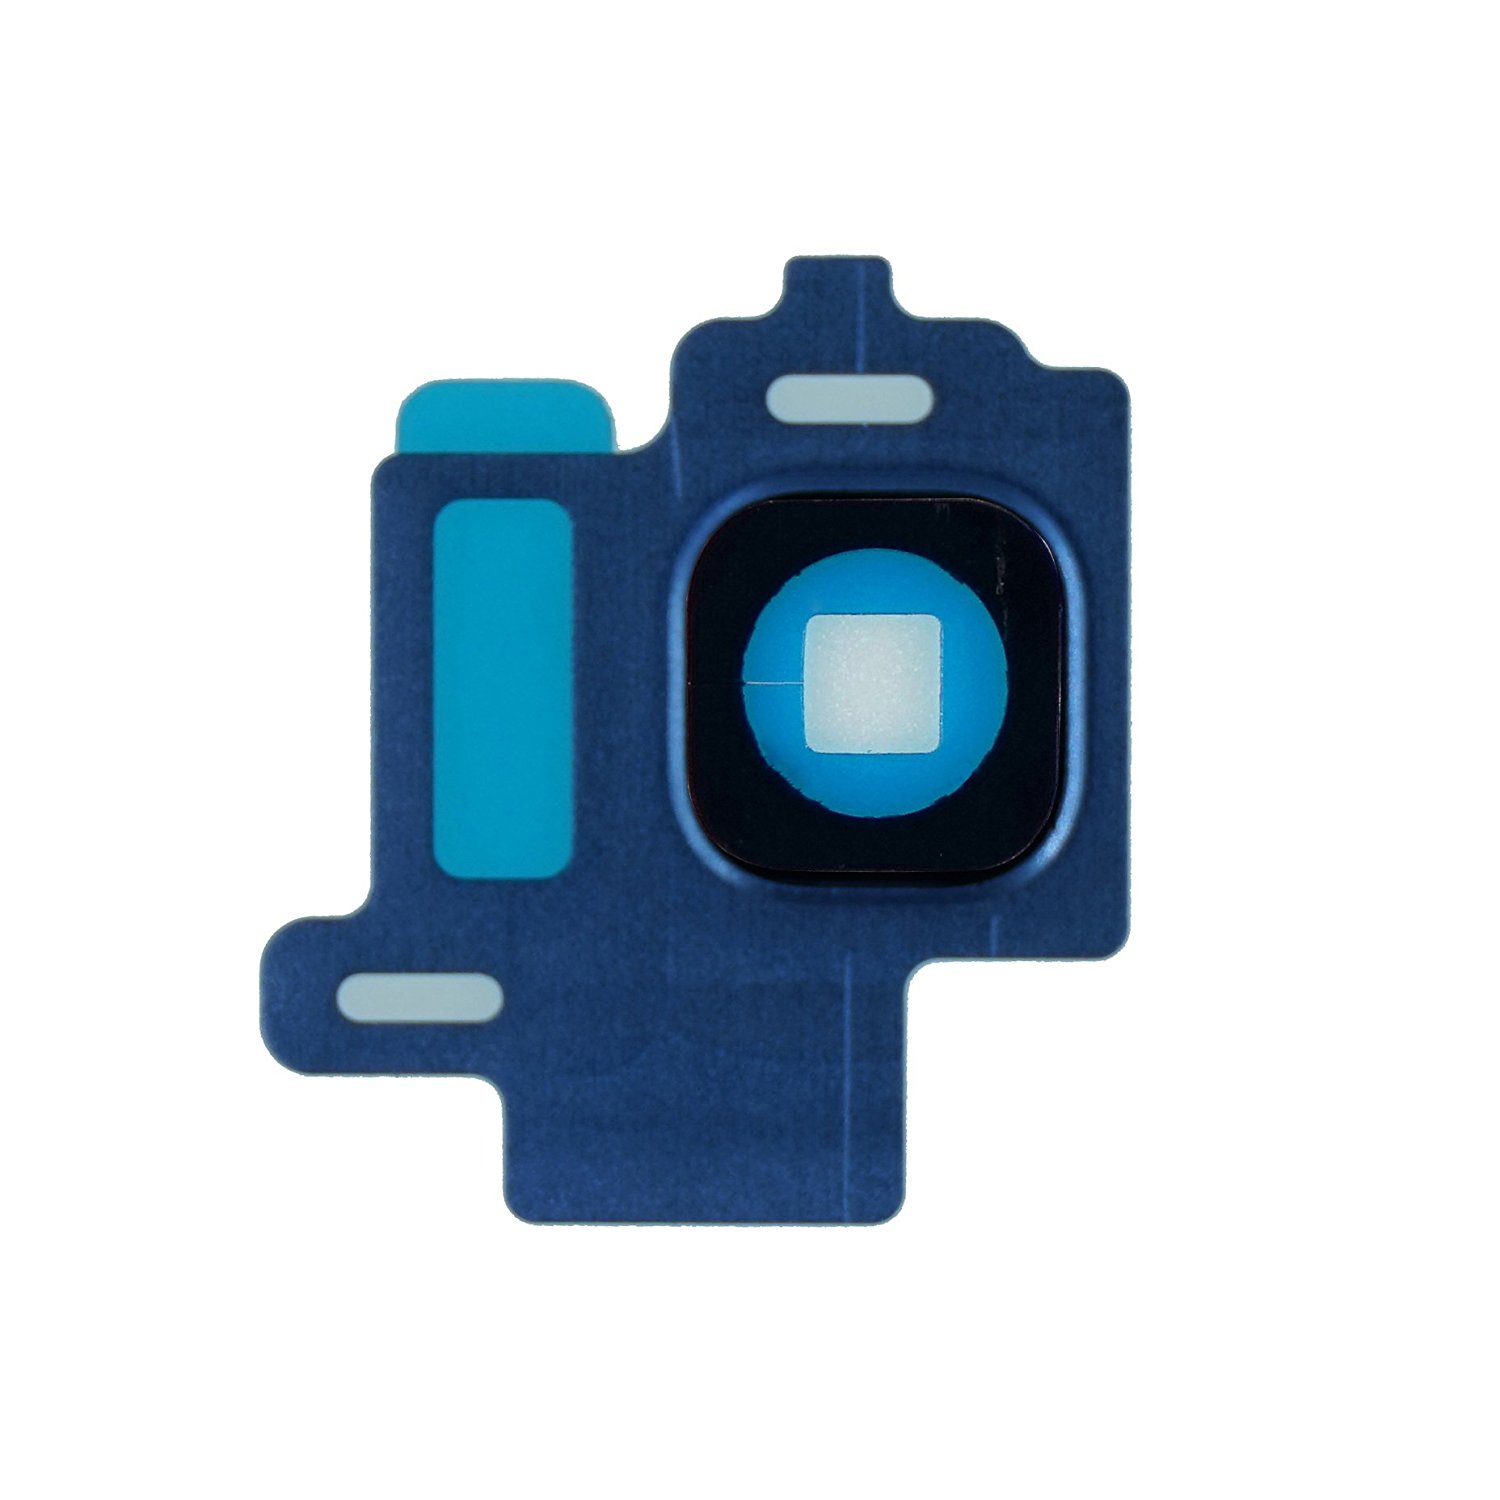 Samsung Galaxy S8 Camera Lens Cover Coral Blue - inclusief lens